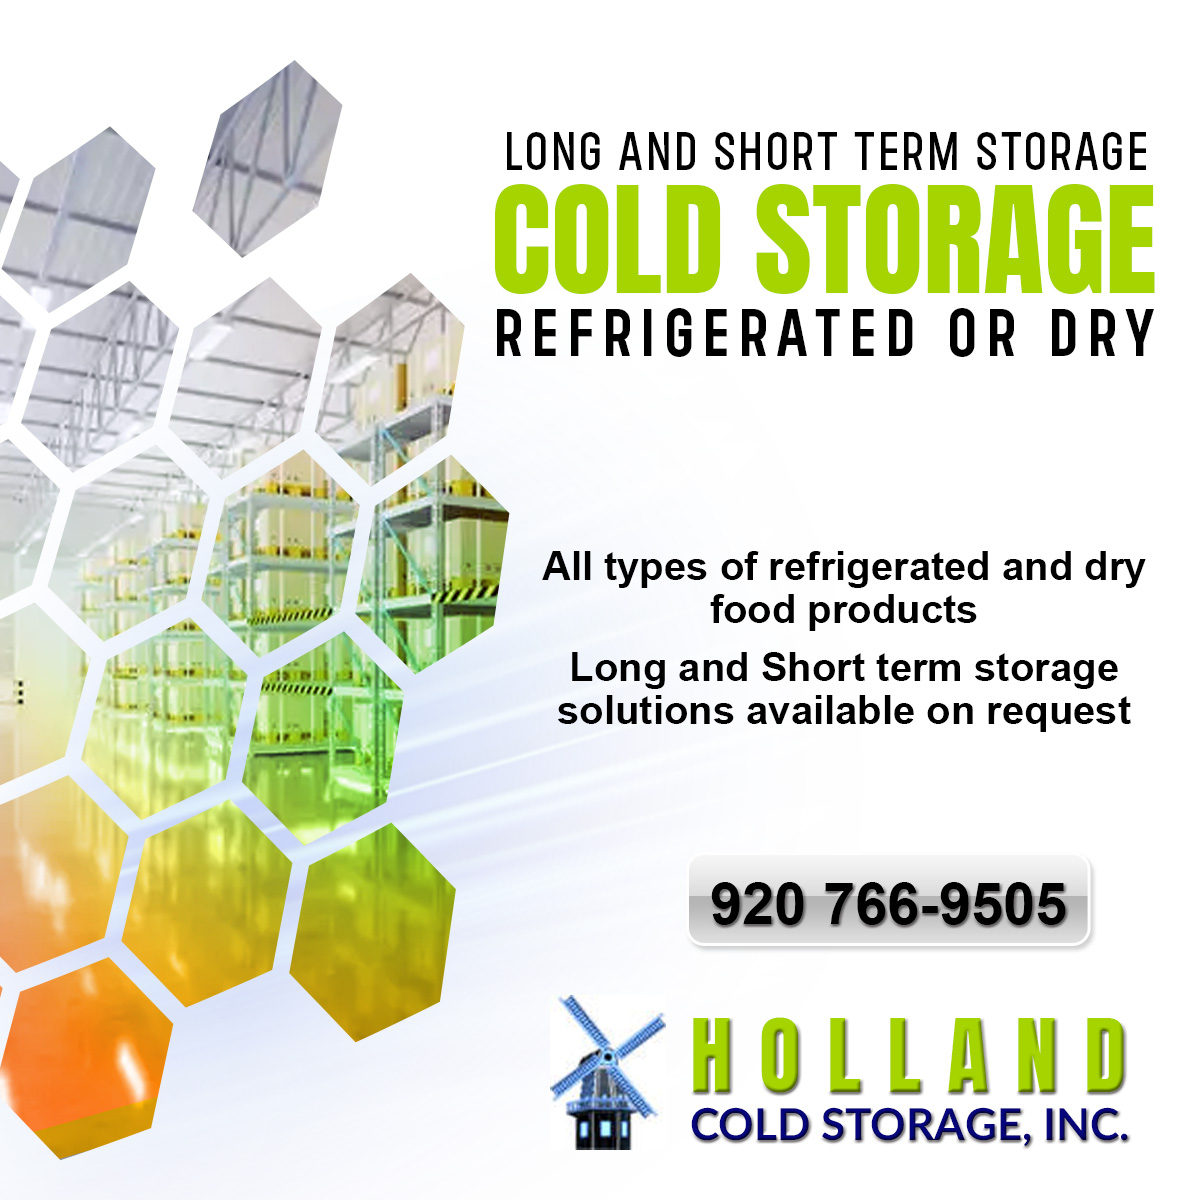 Holland Cold Storage